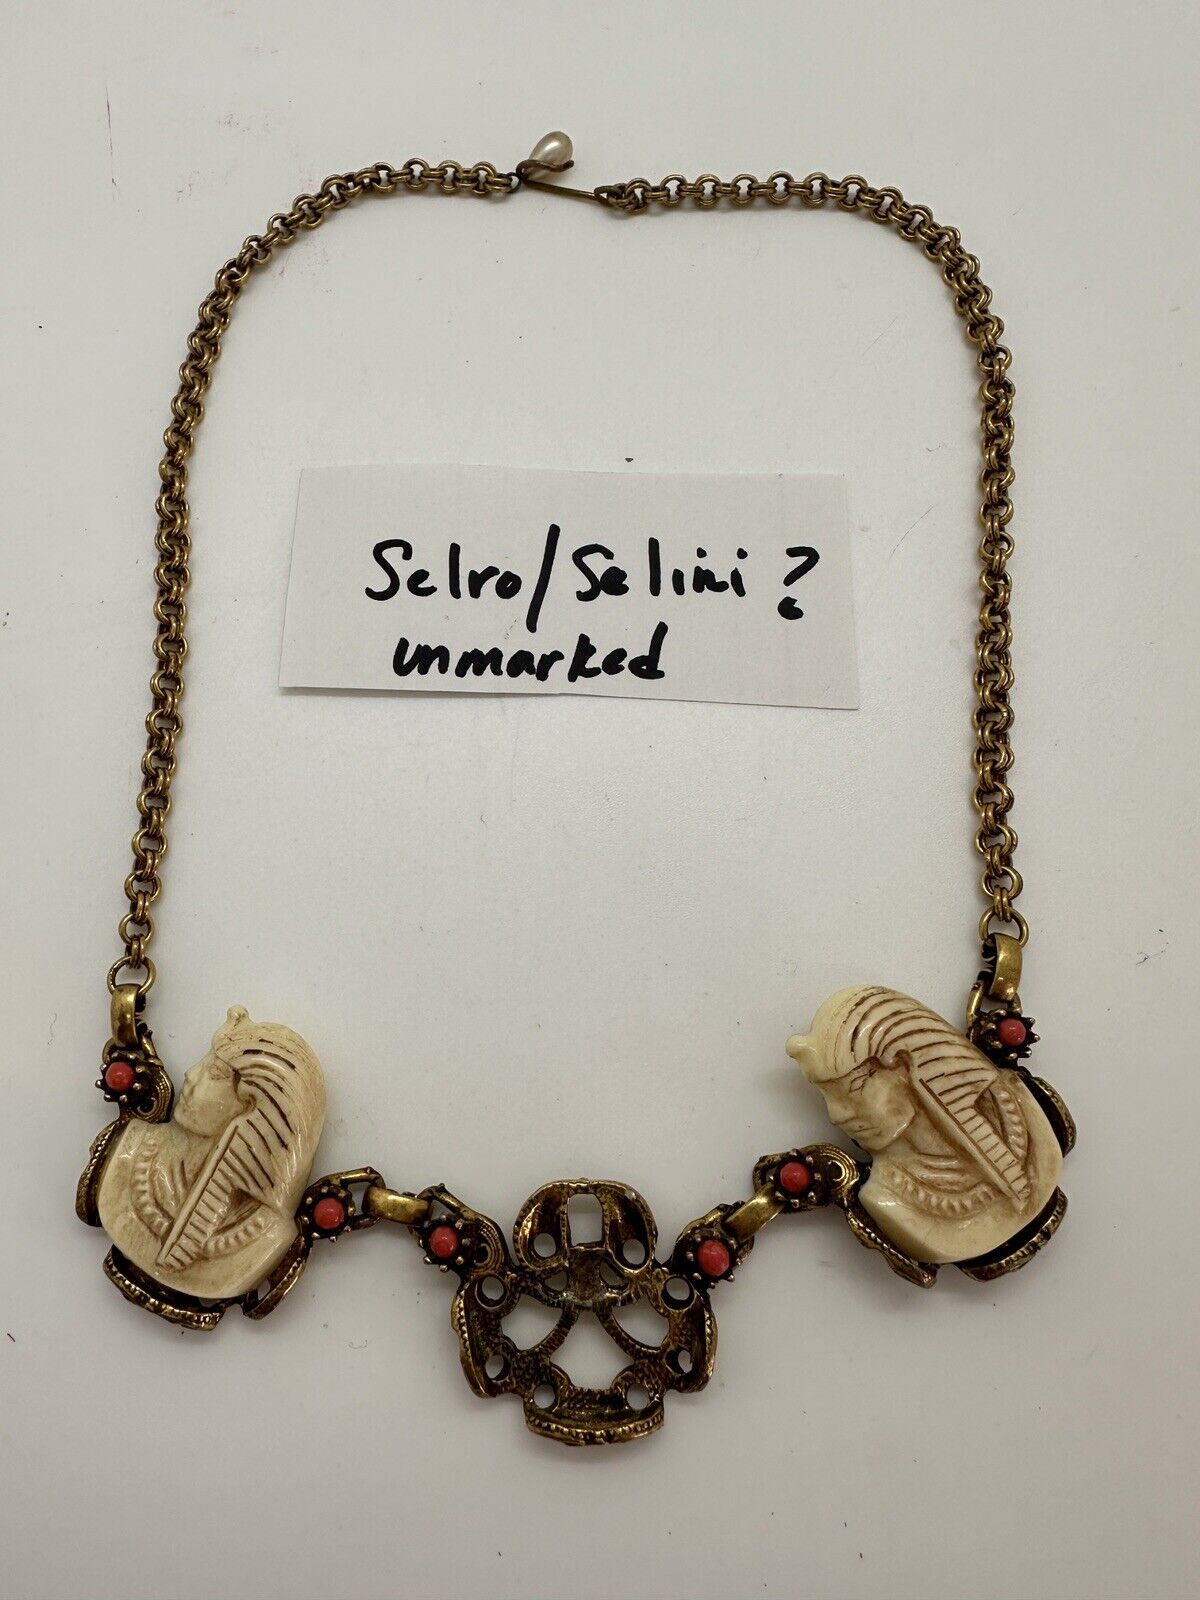 Vintage Selro Selini? Egyptian Revival Unsigned P… - image 1